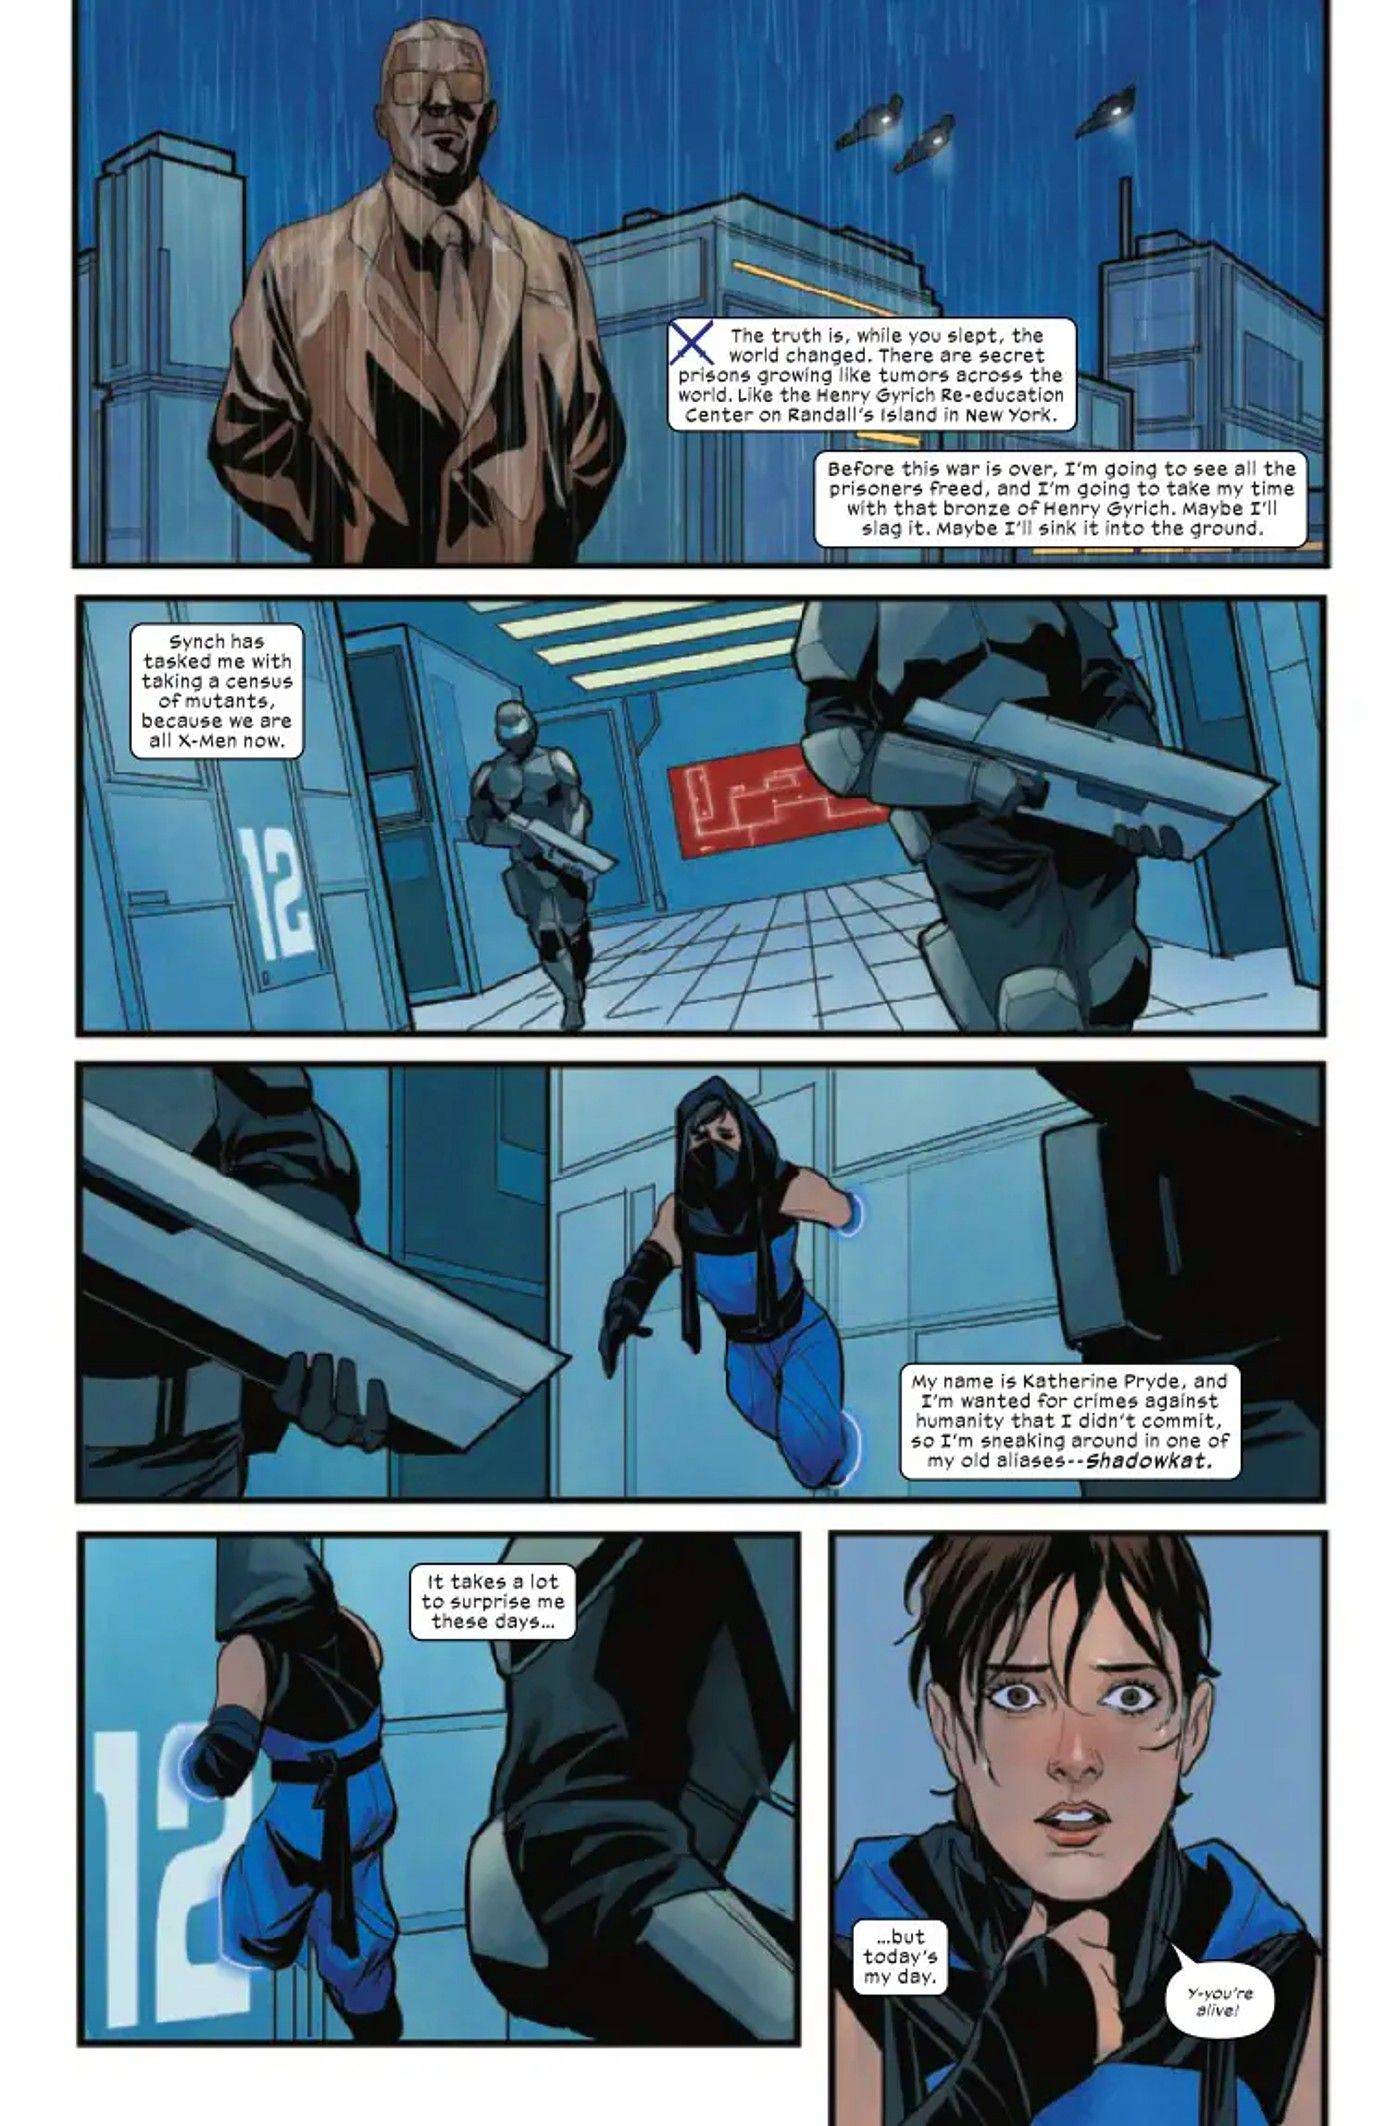 X-men 27 preview page 1